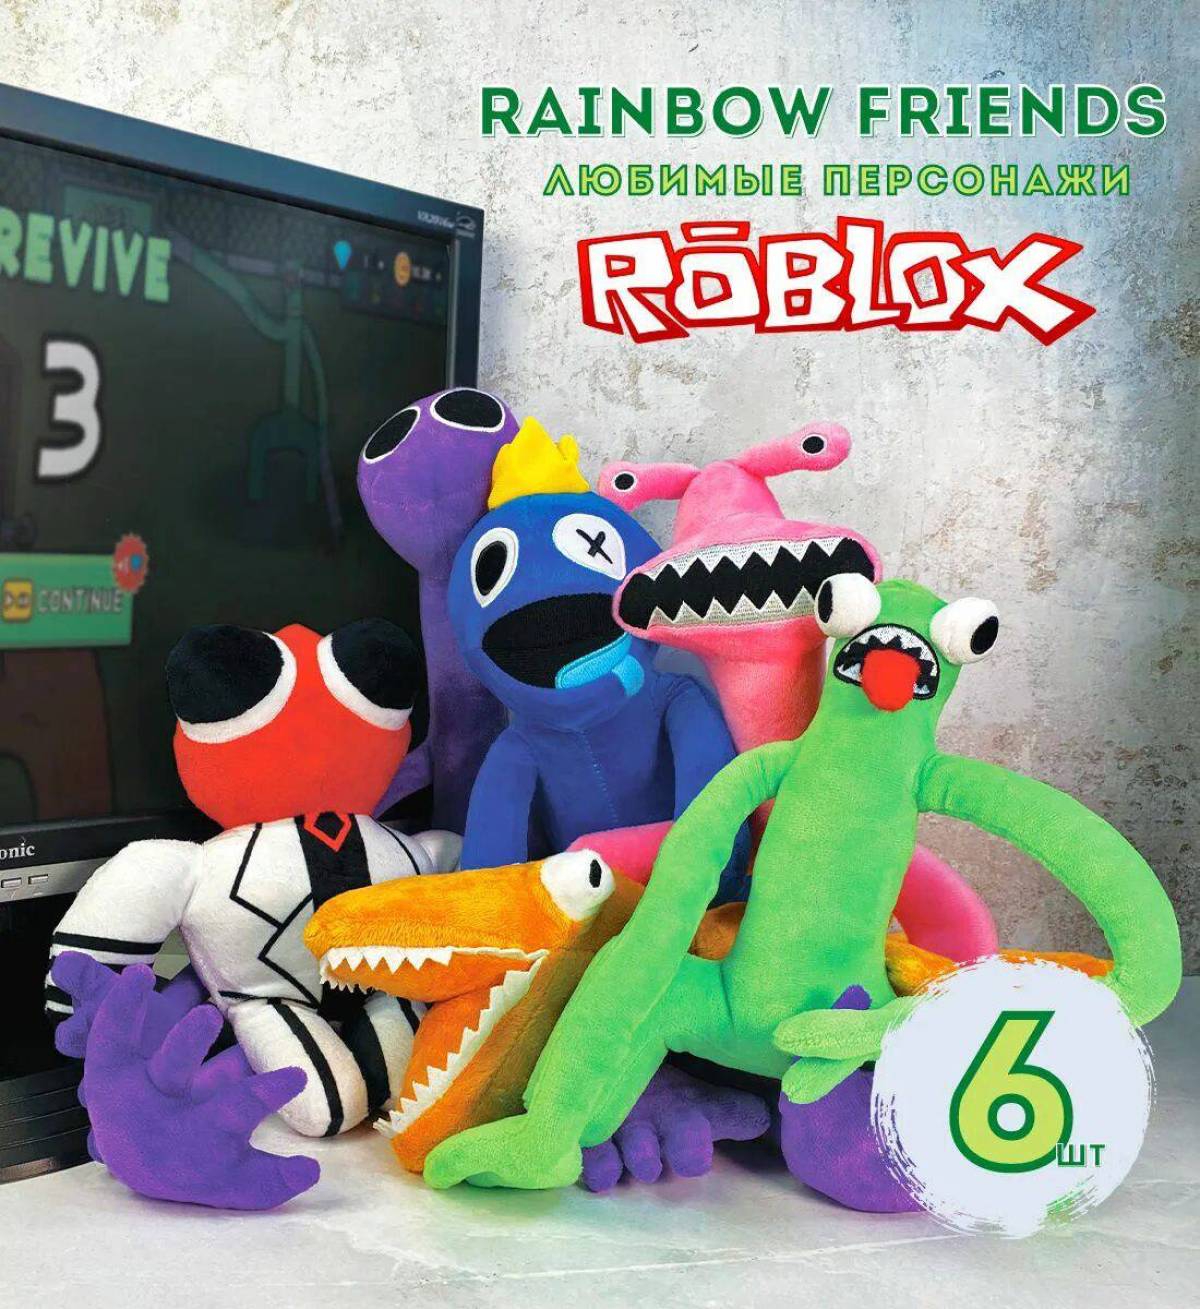 Rainbow friends roblox #24